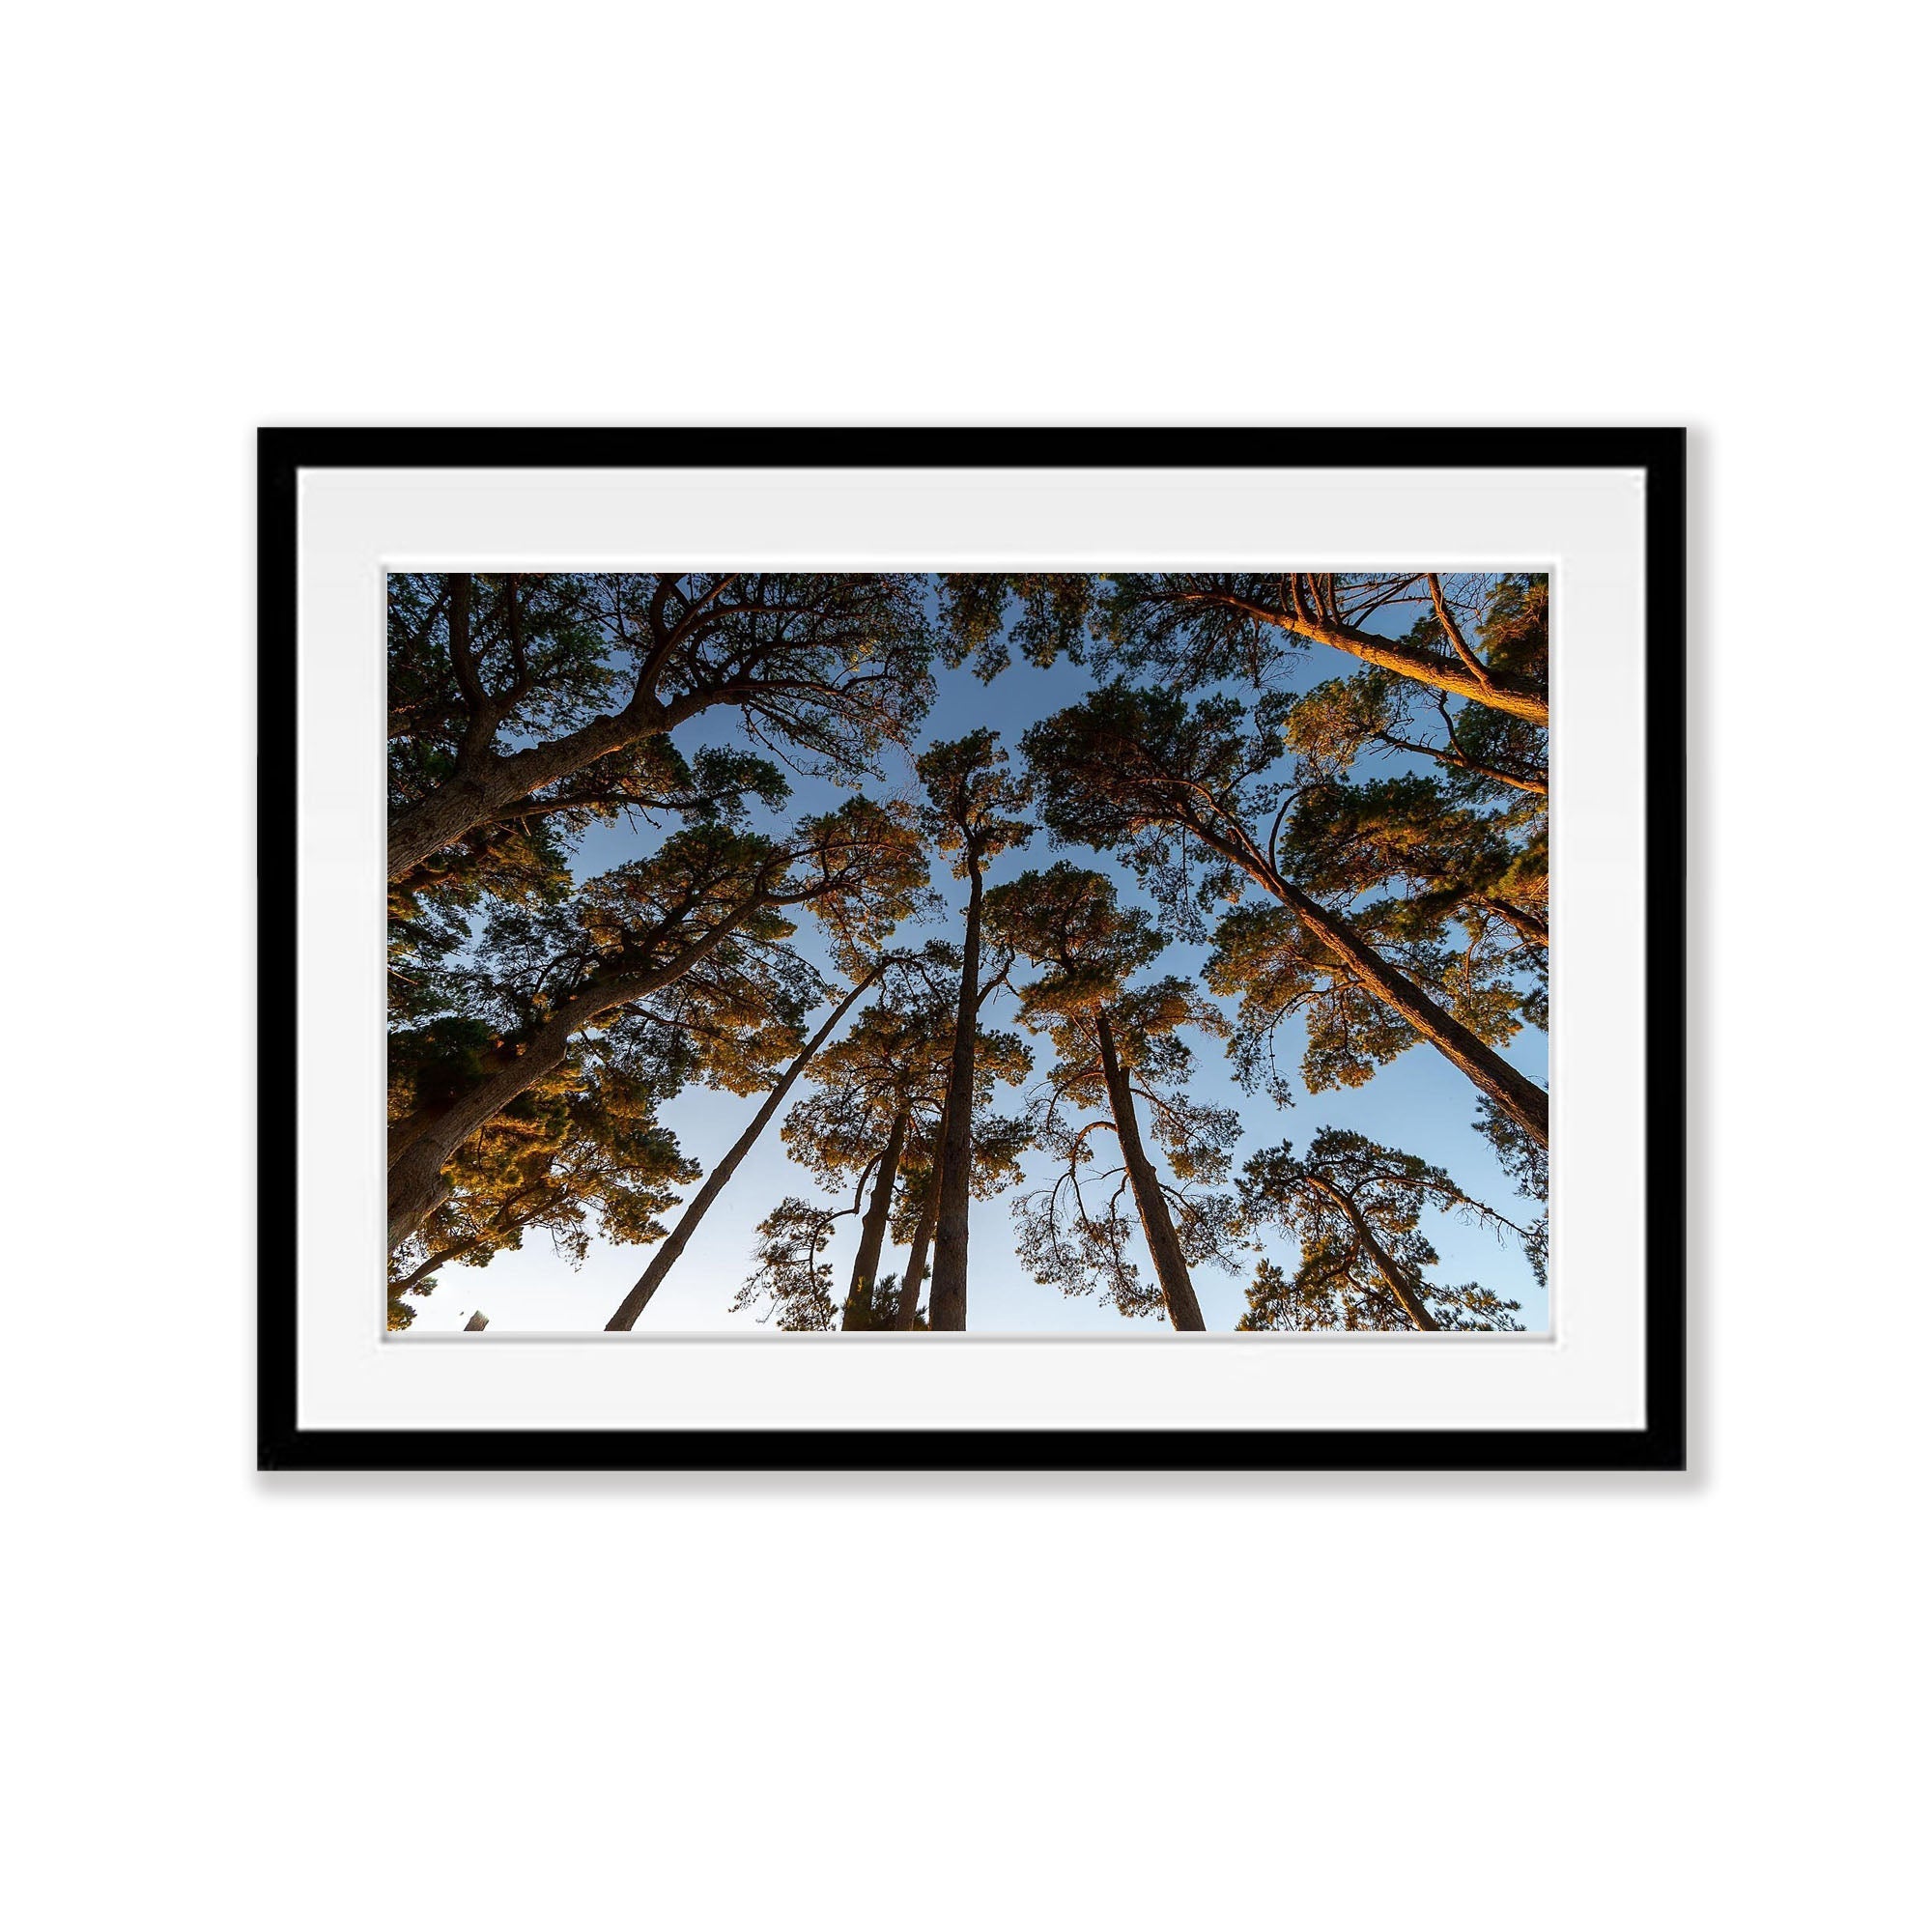 Looking Up, Shoreham Pine Forest, Mornington Peninsula, VIC